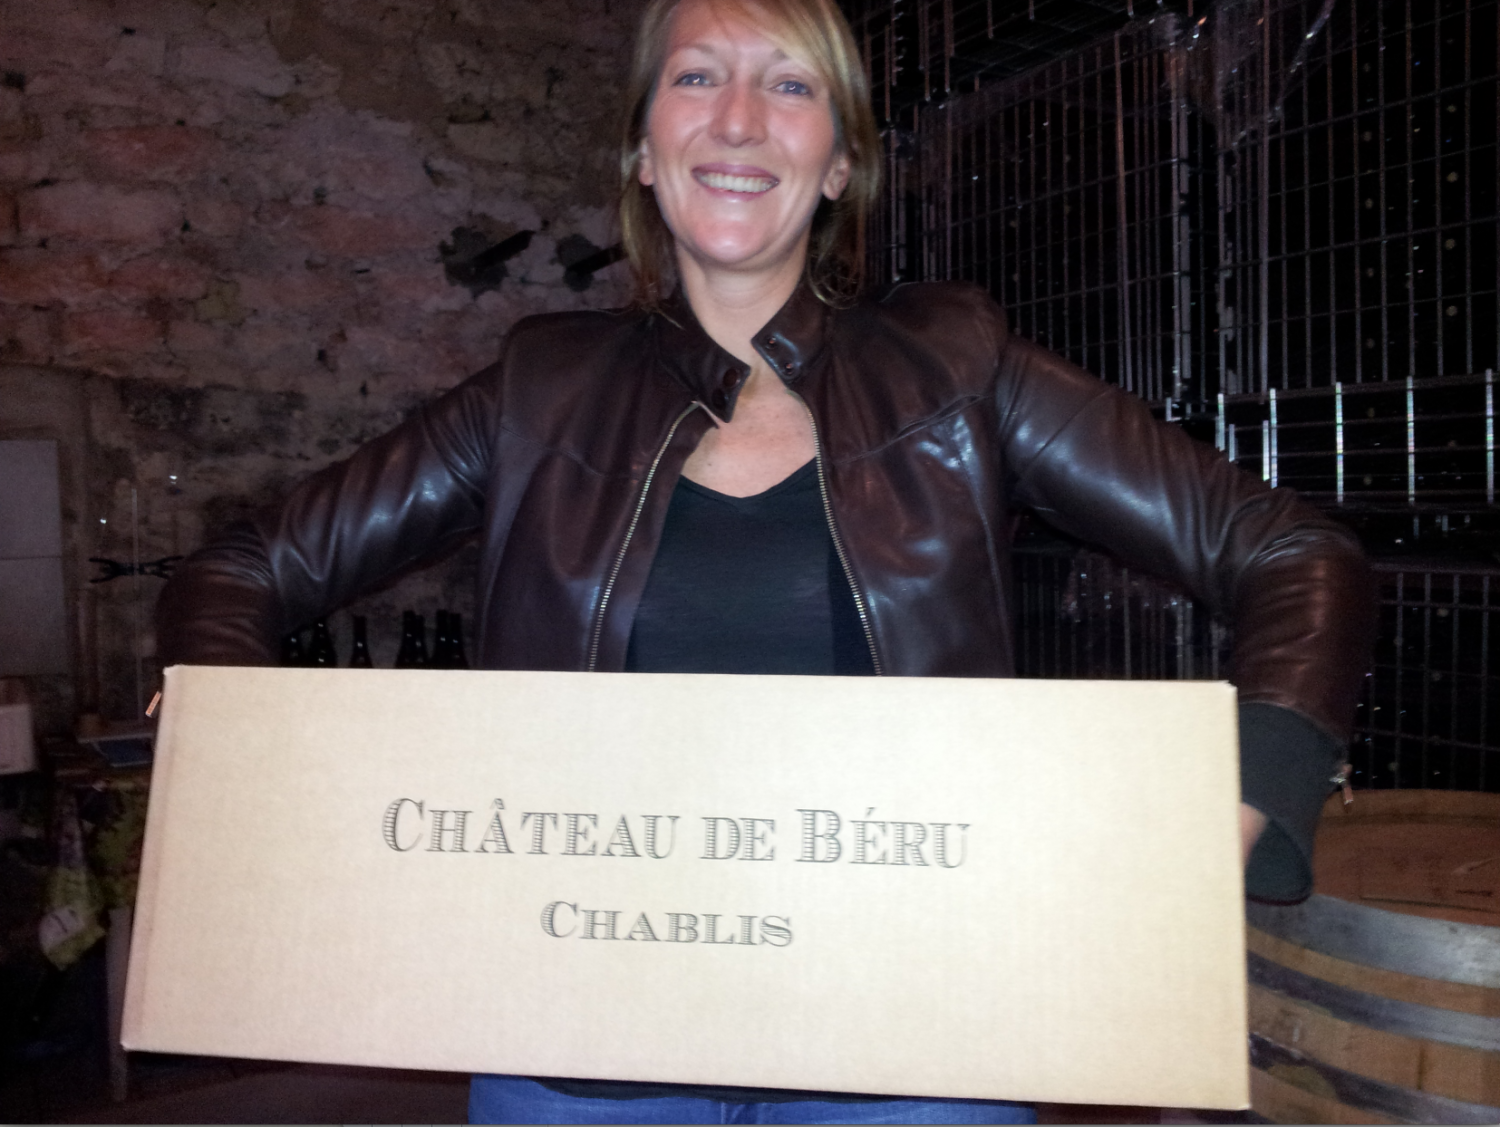 Athénaïs de Béru met Chablis Château de Béru 2010